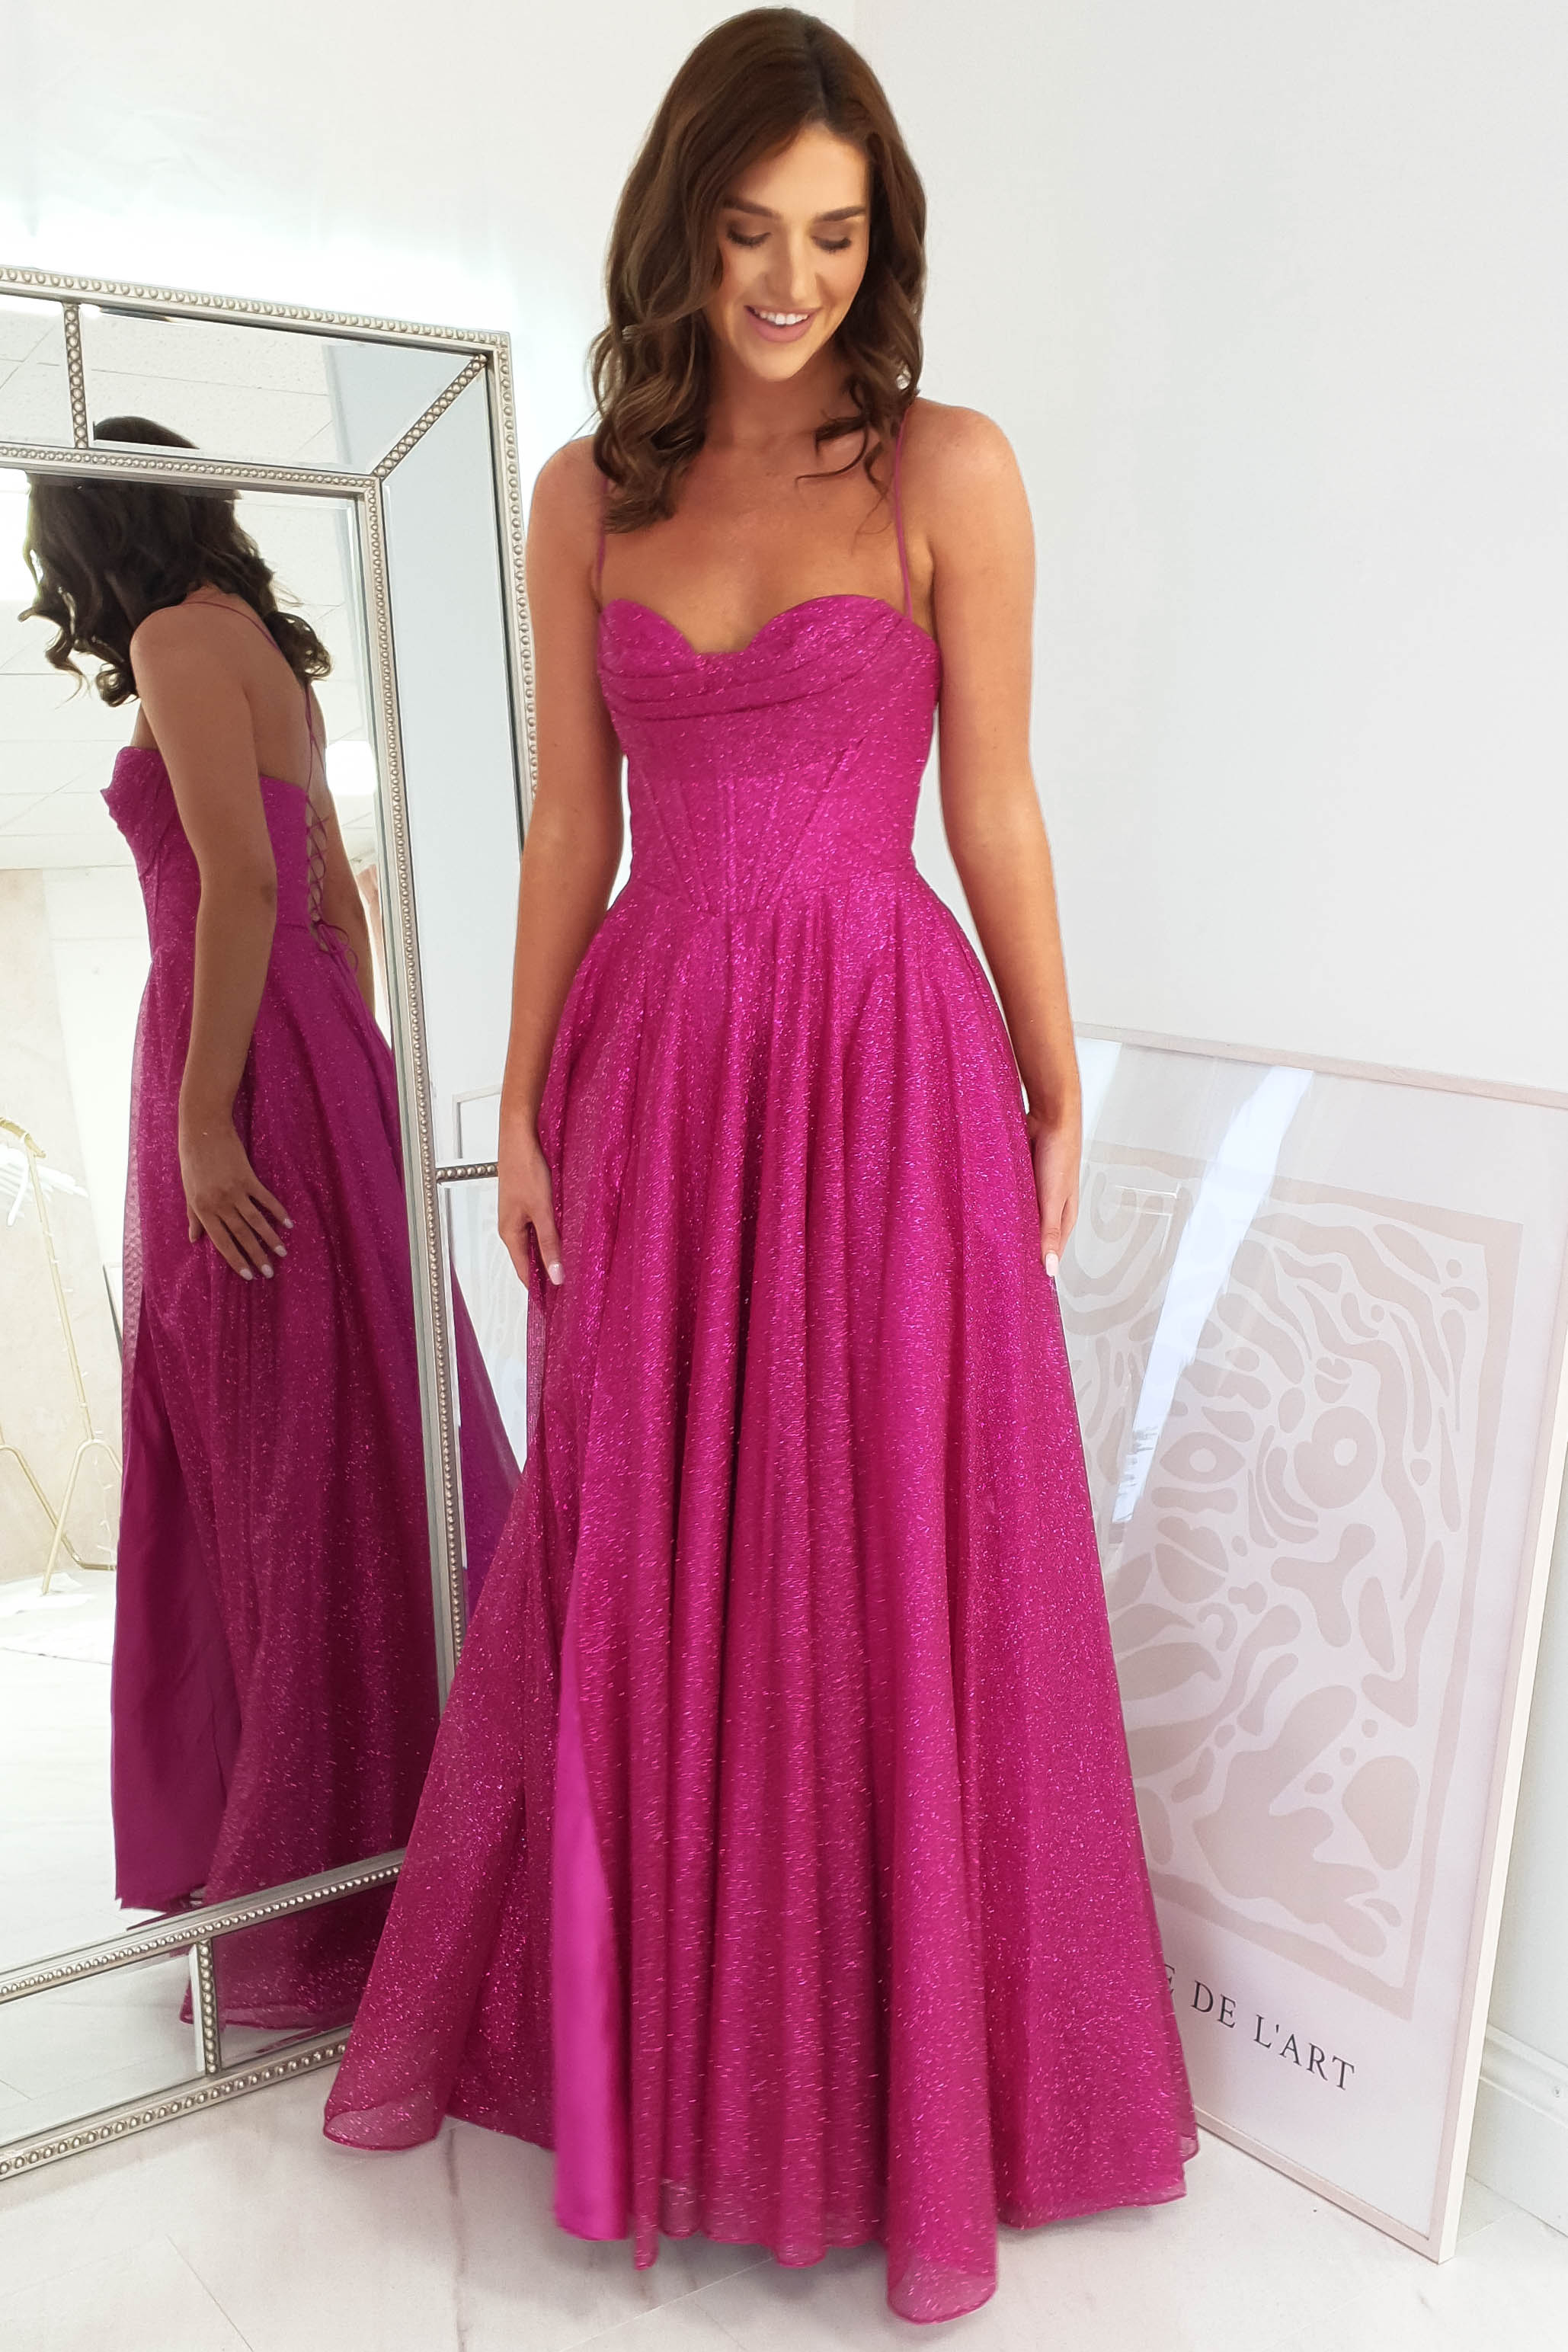 done-aurora-corest-glitter-gown-fuchsia-cind-dresses-48205326156117.jpg